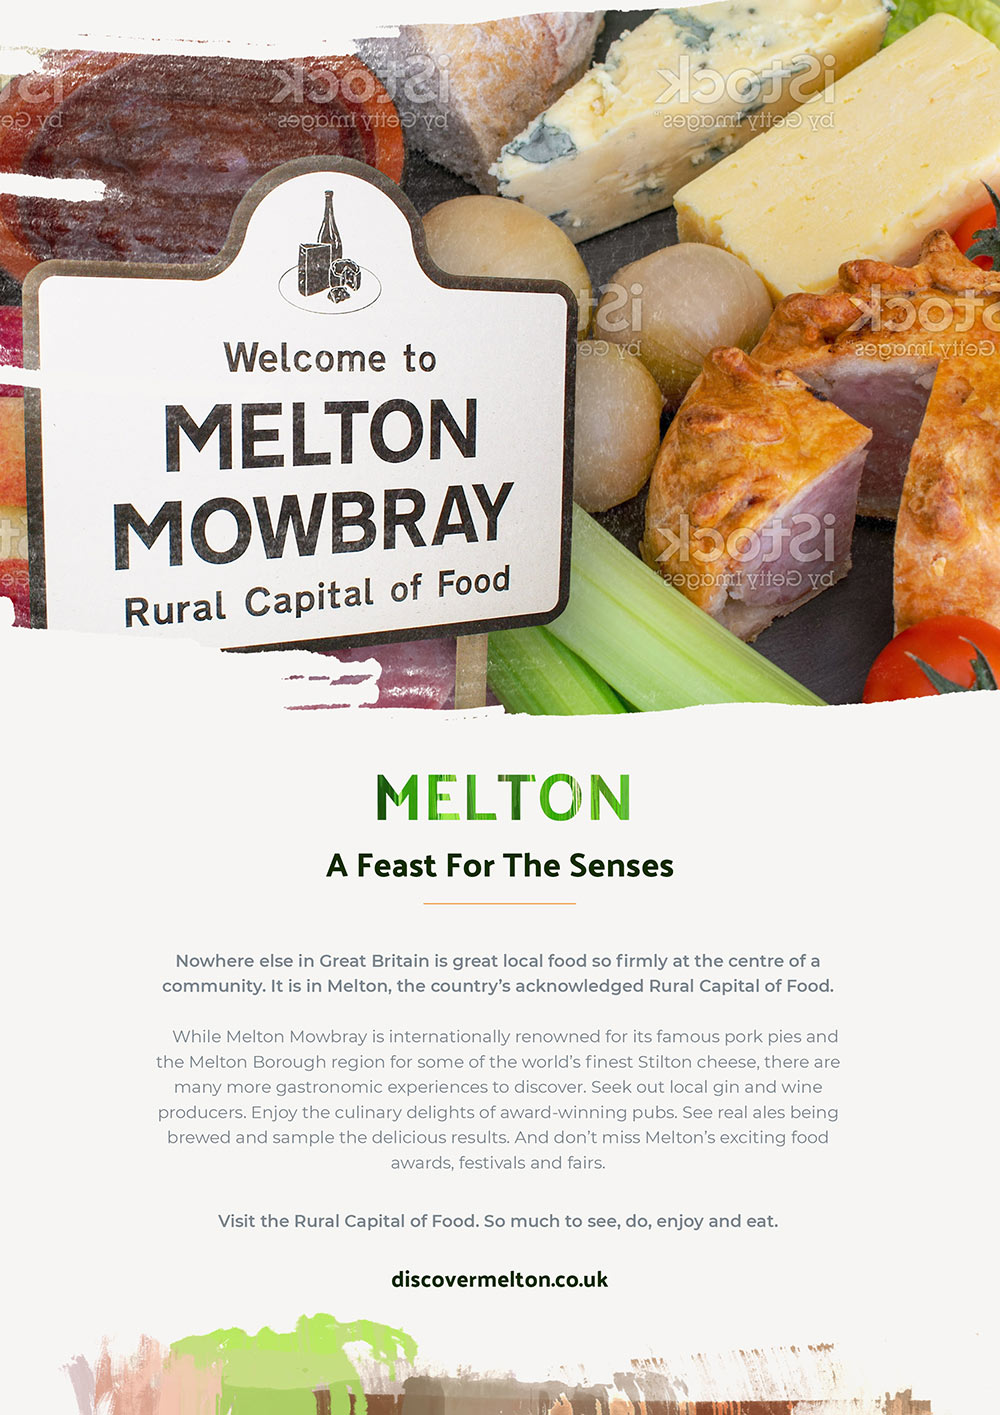 Melton Borough Council Great Food Club advertisement